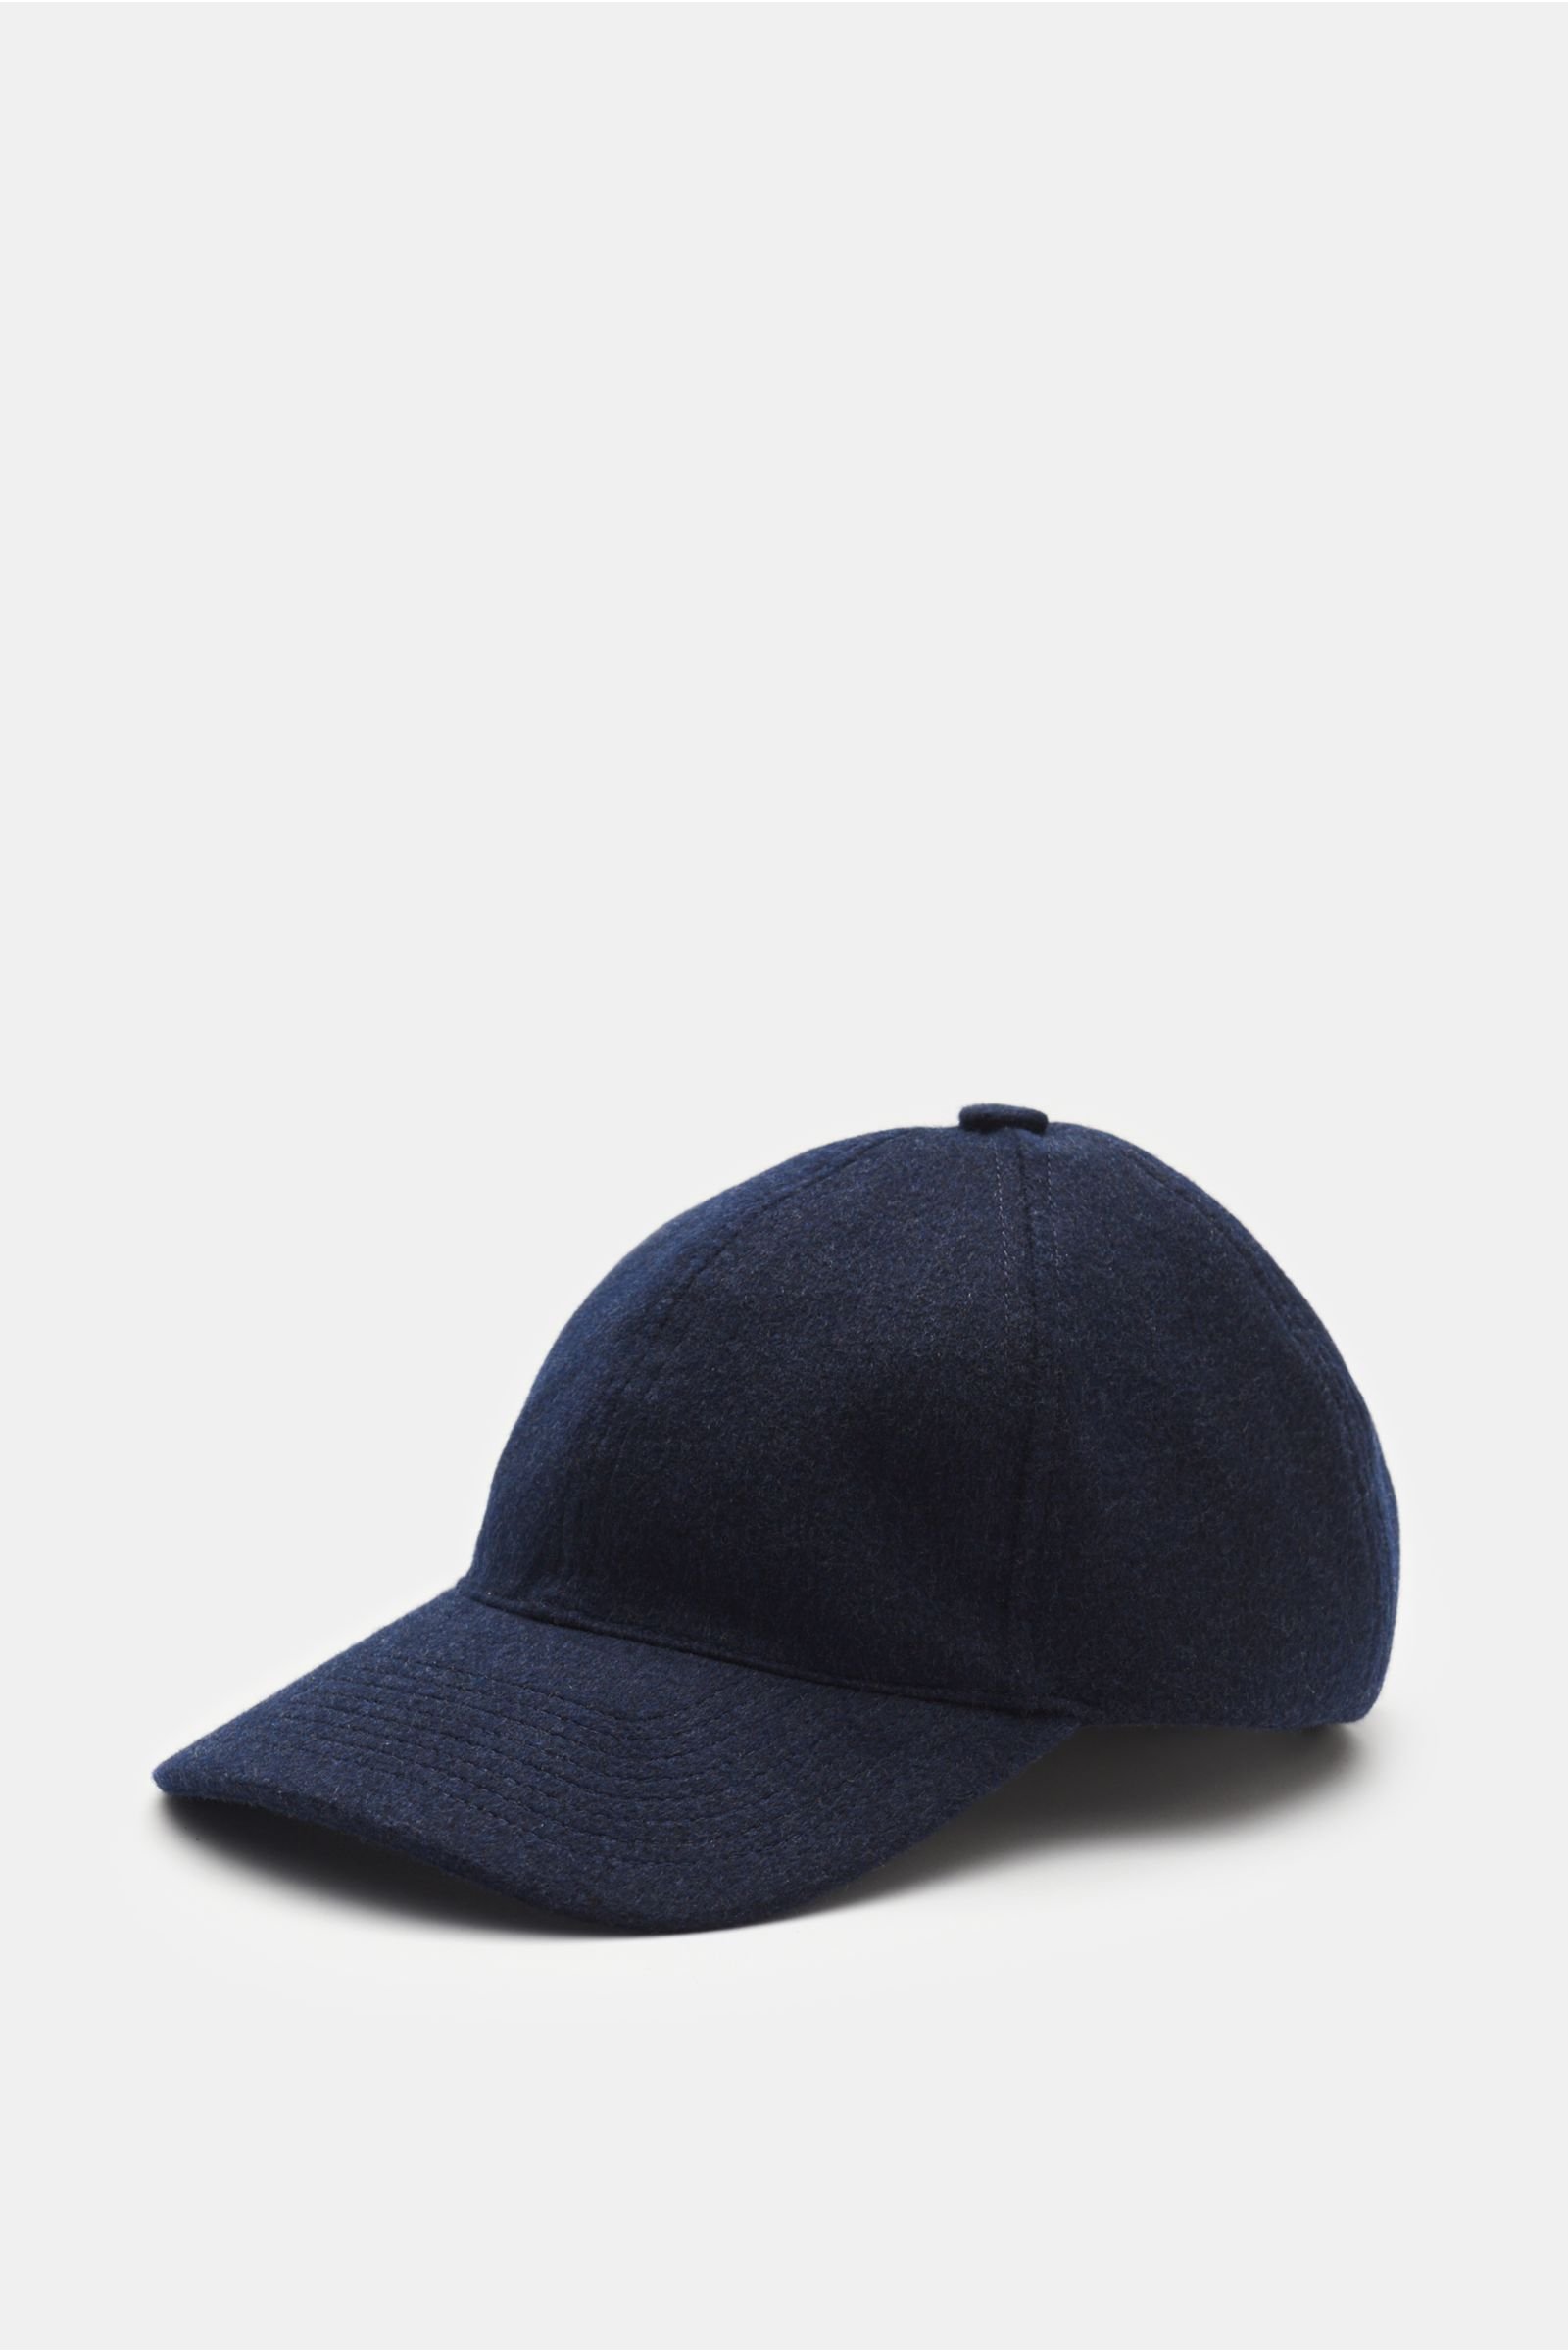 Cashmere baseball cap navy